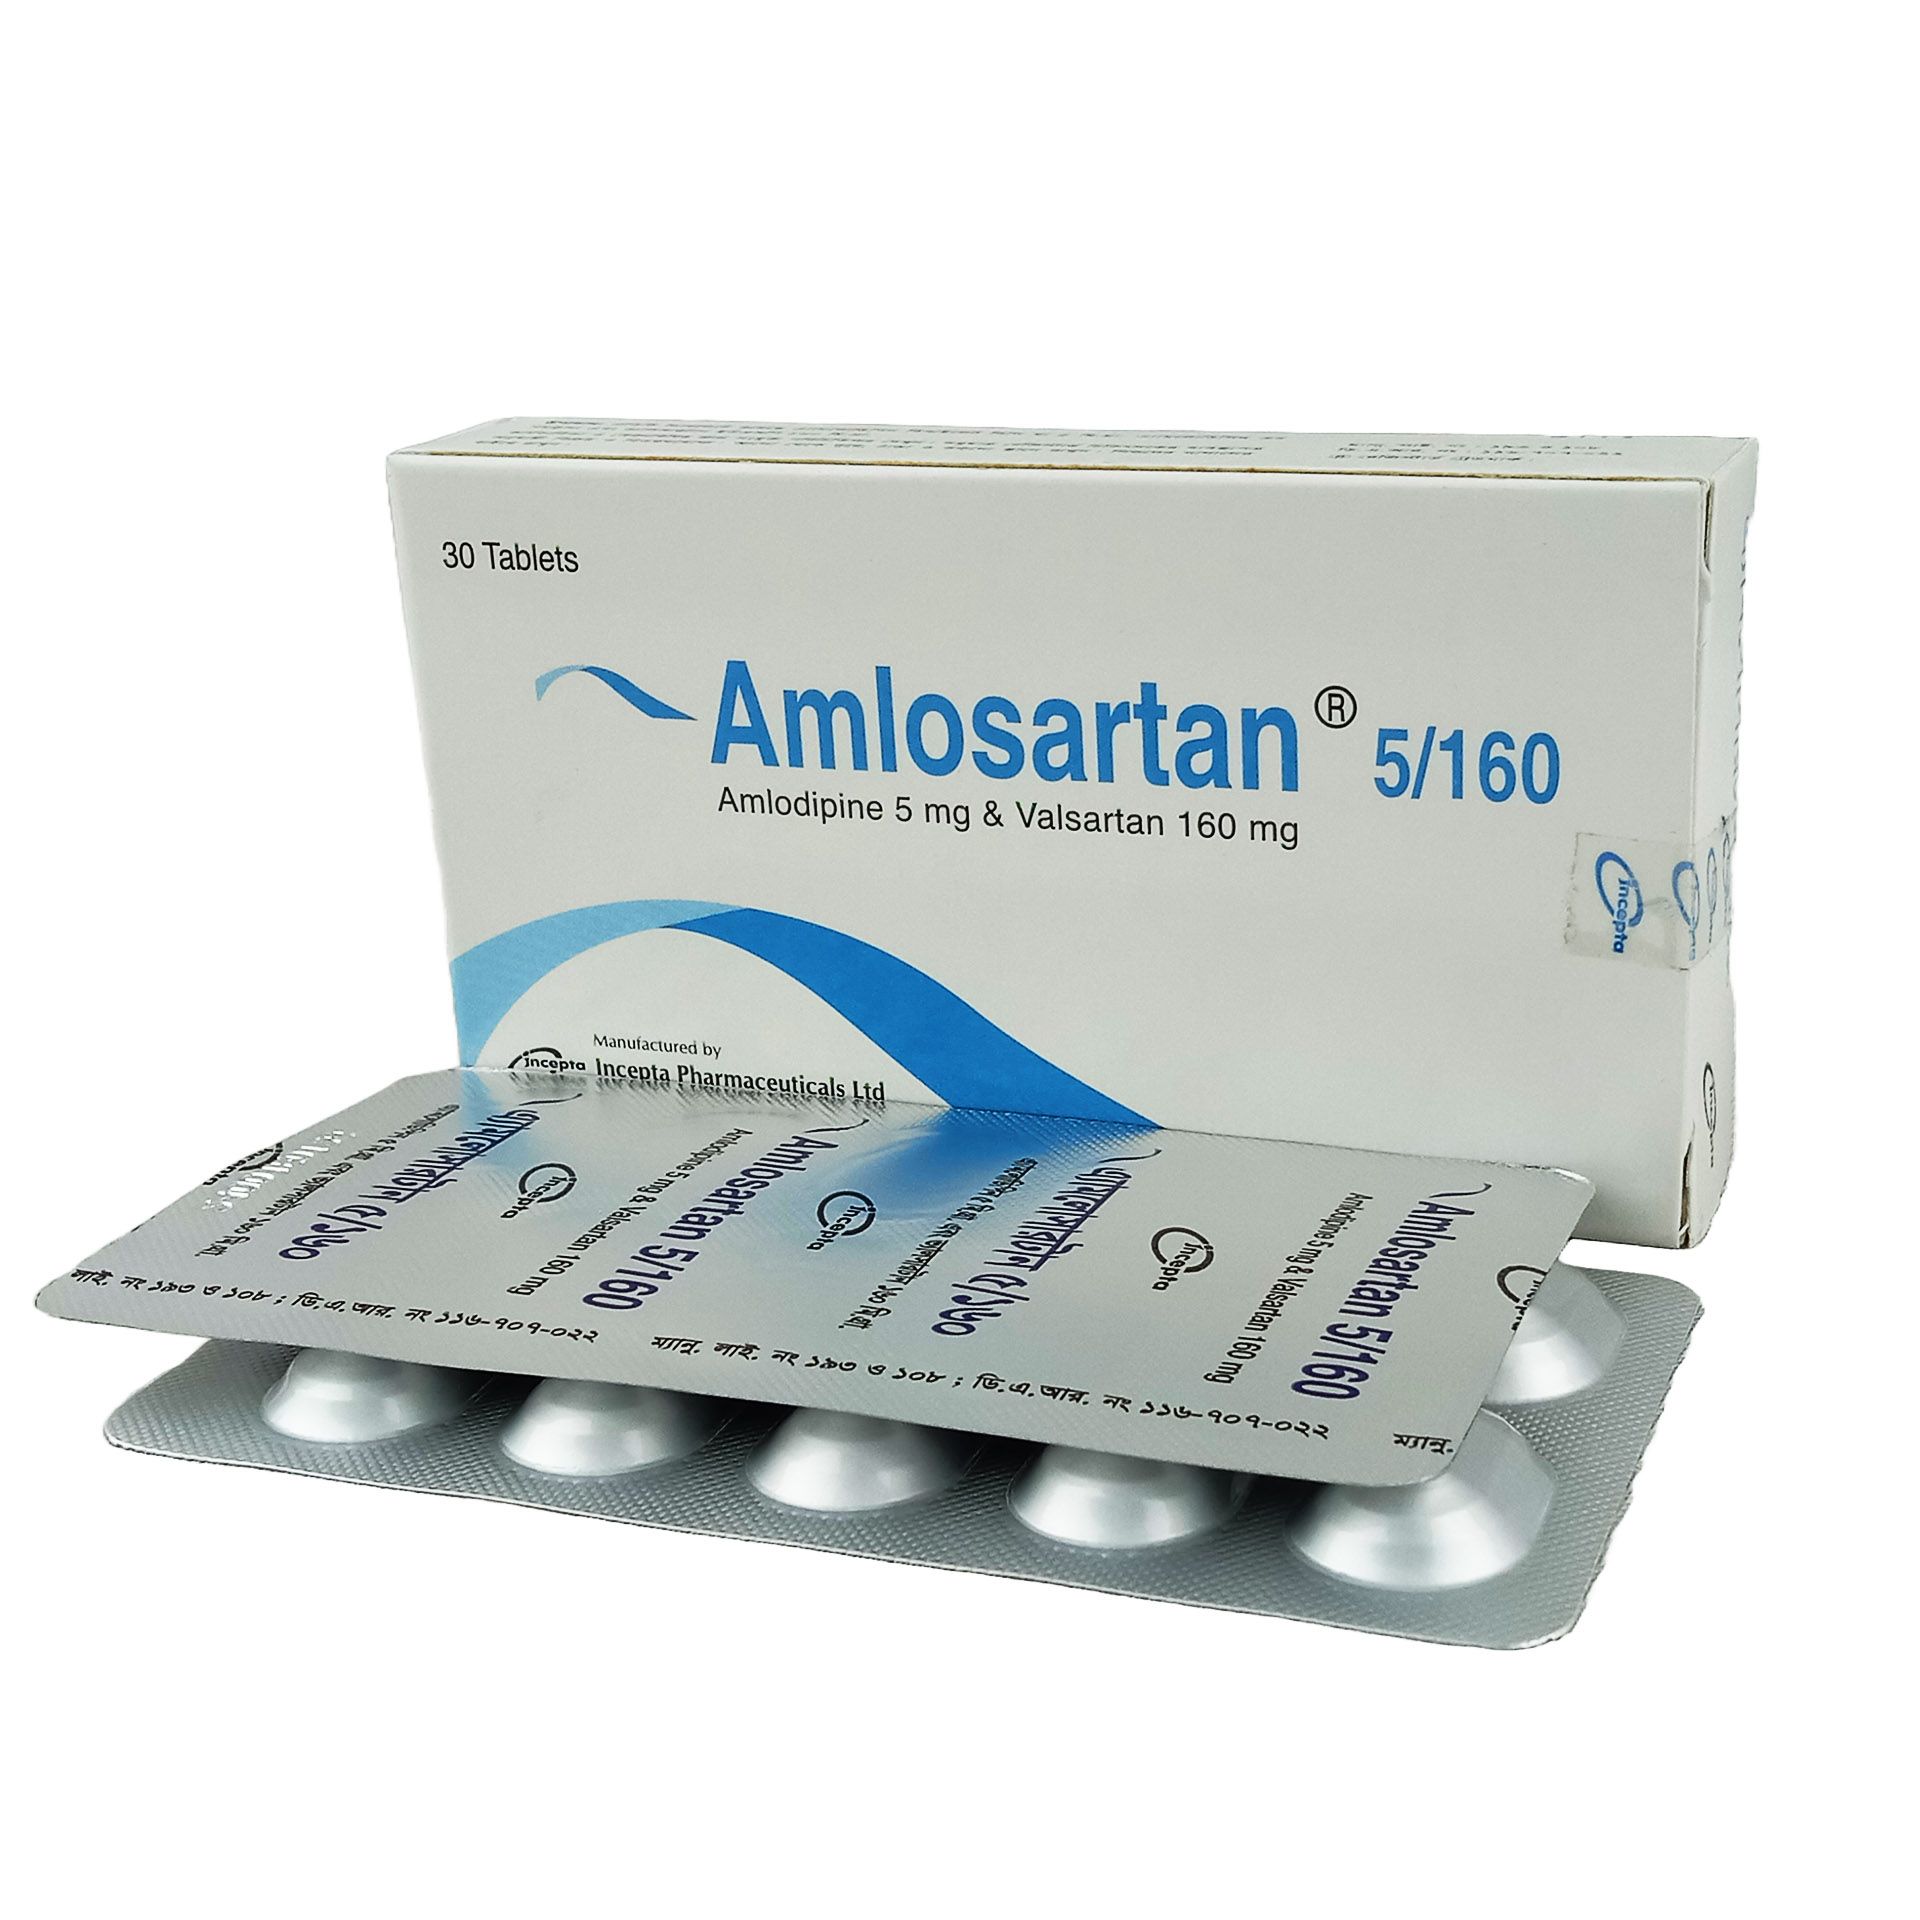 Amlosartan 5/160 5mg+160mg Tablet